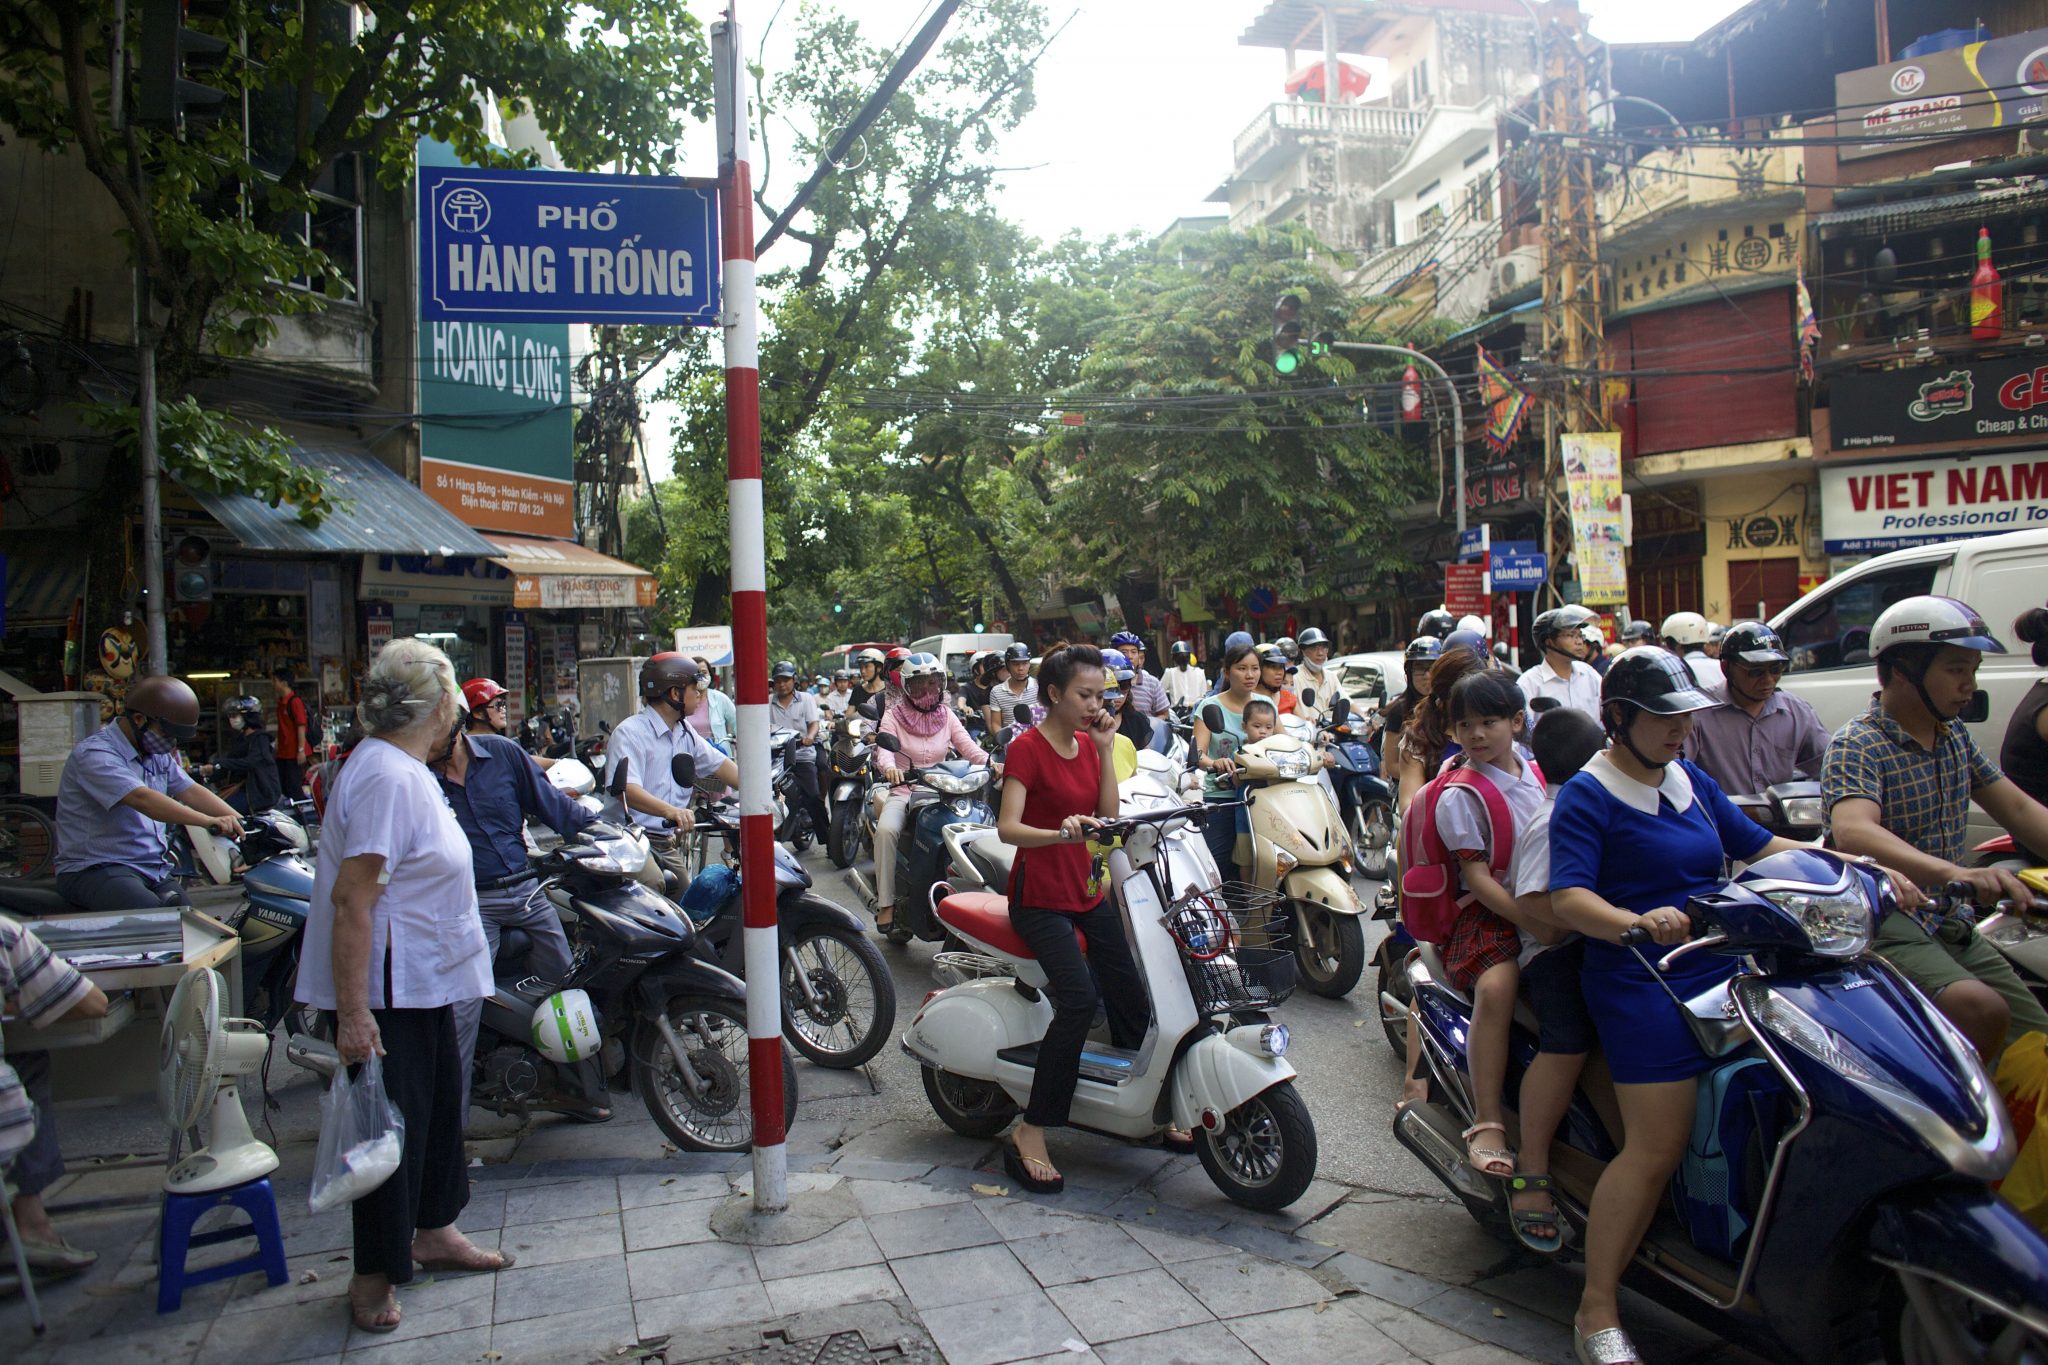 How FDI fuels vietnam's modernization